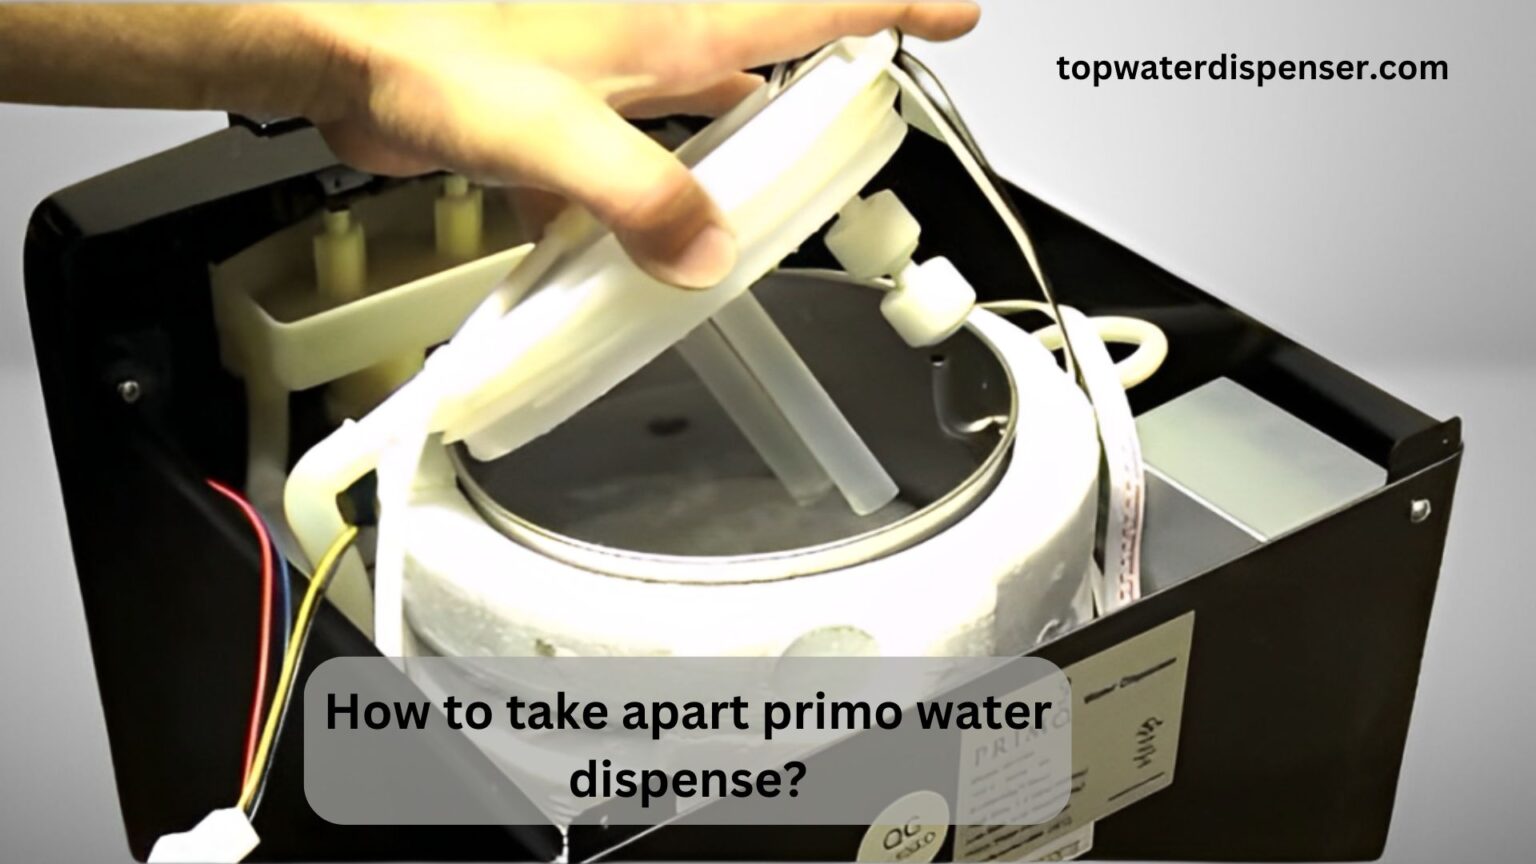 How to take apart primo water dispense?